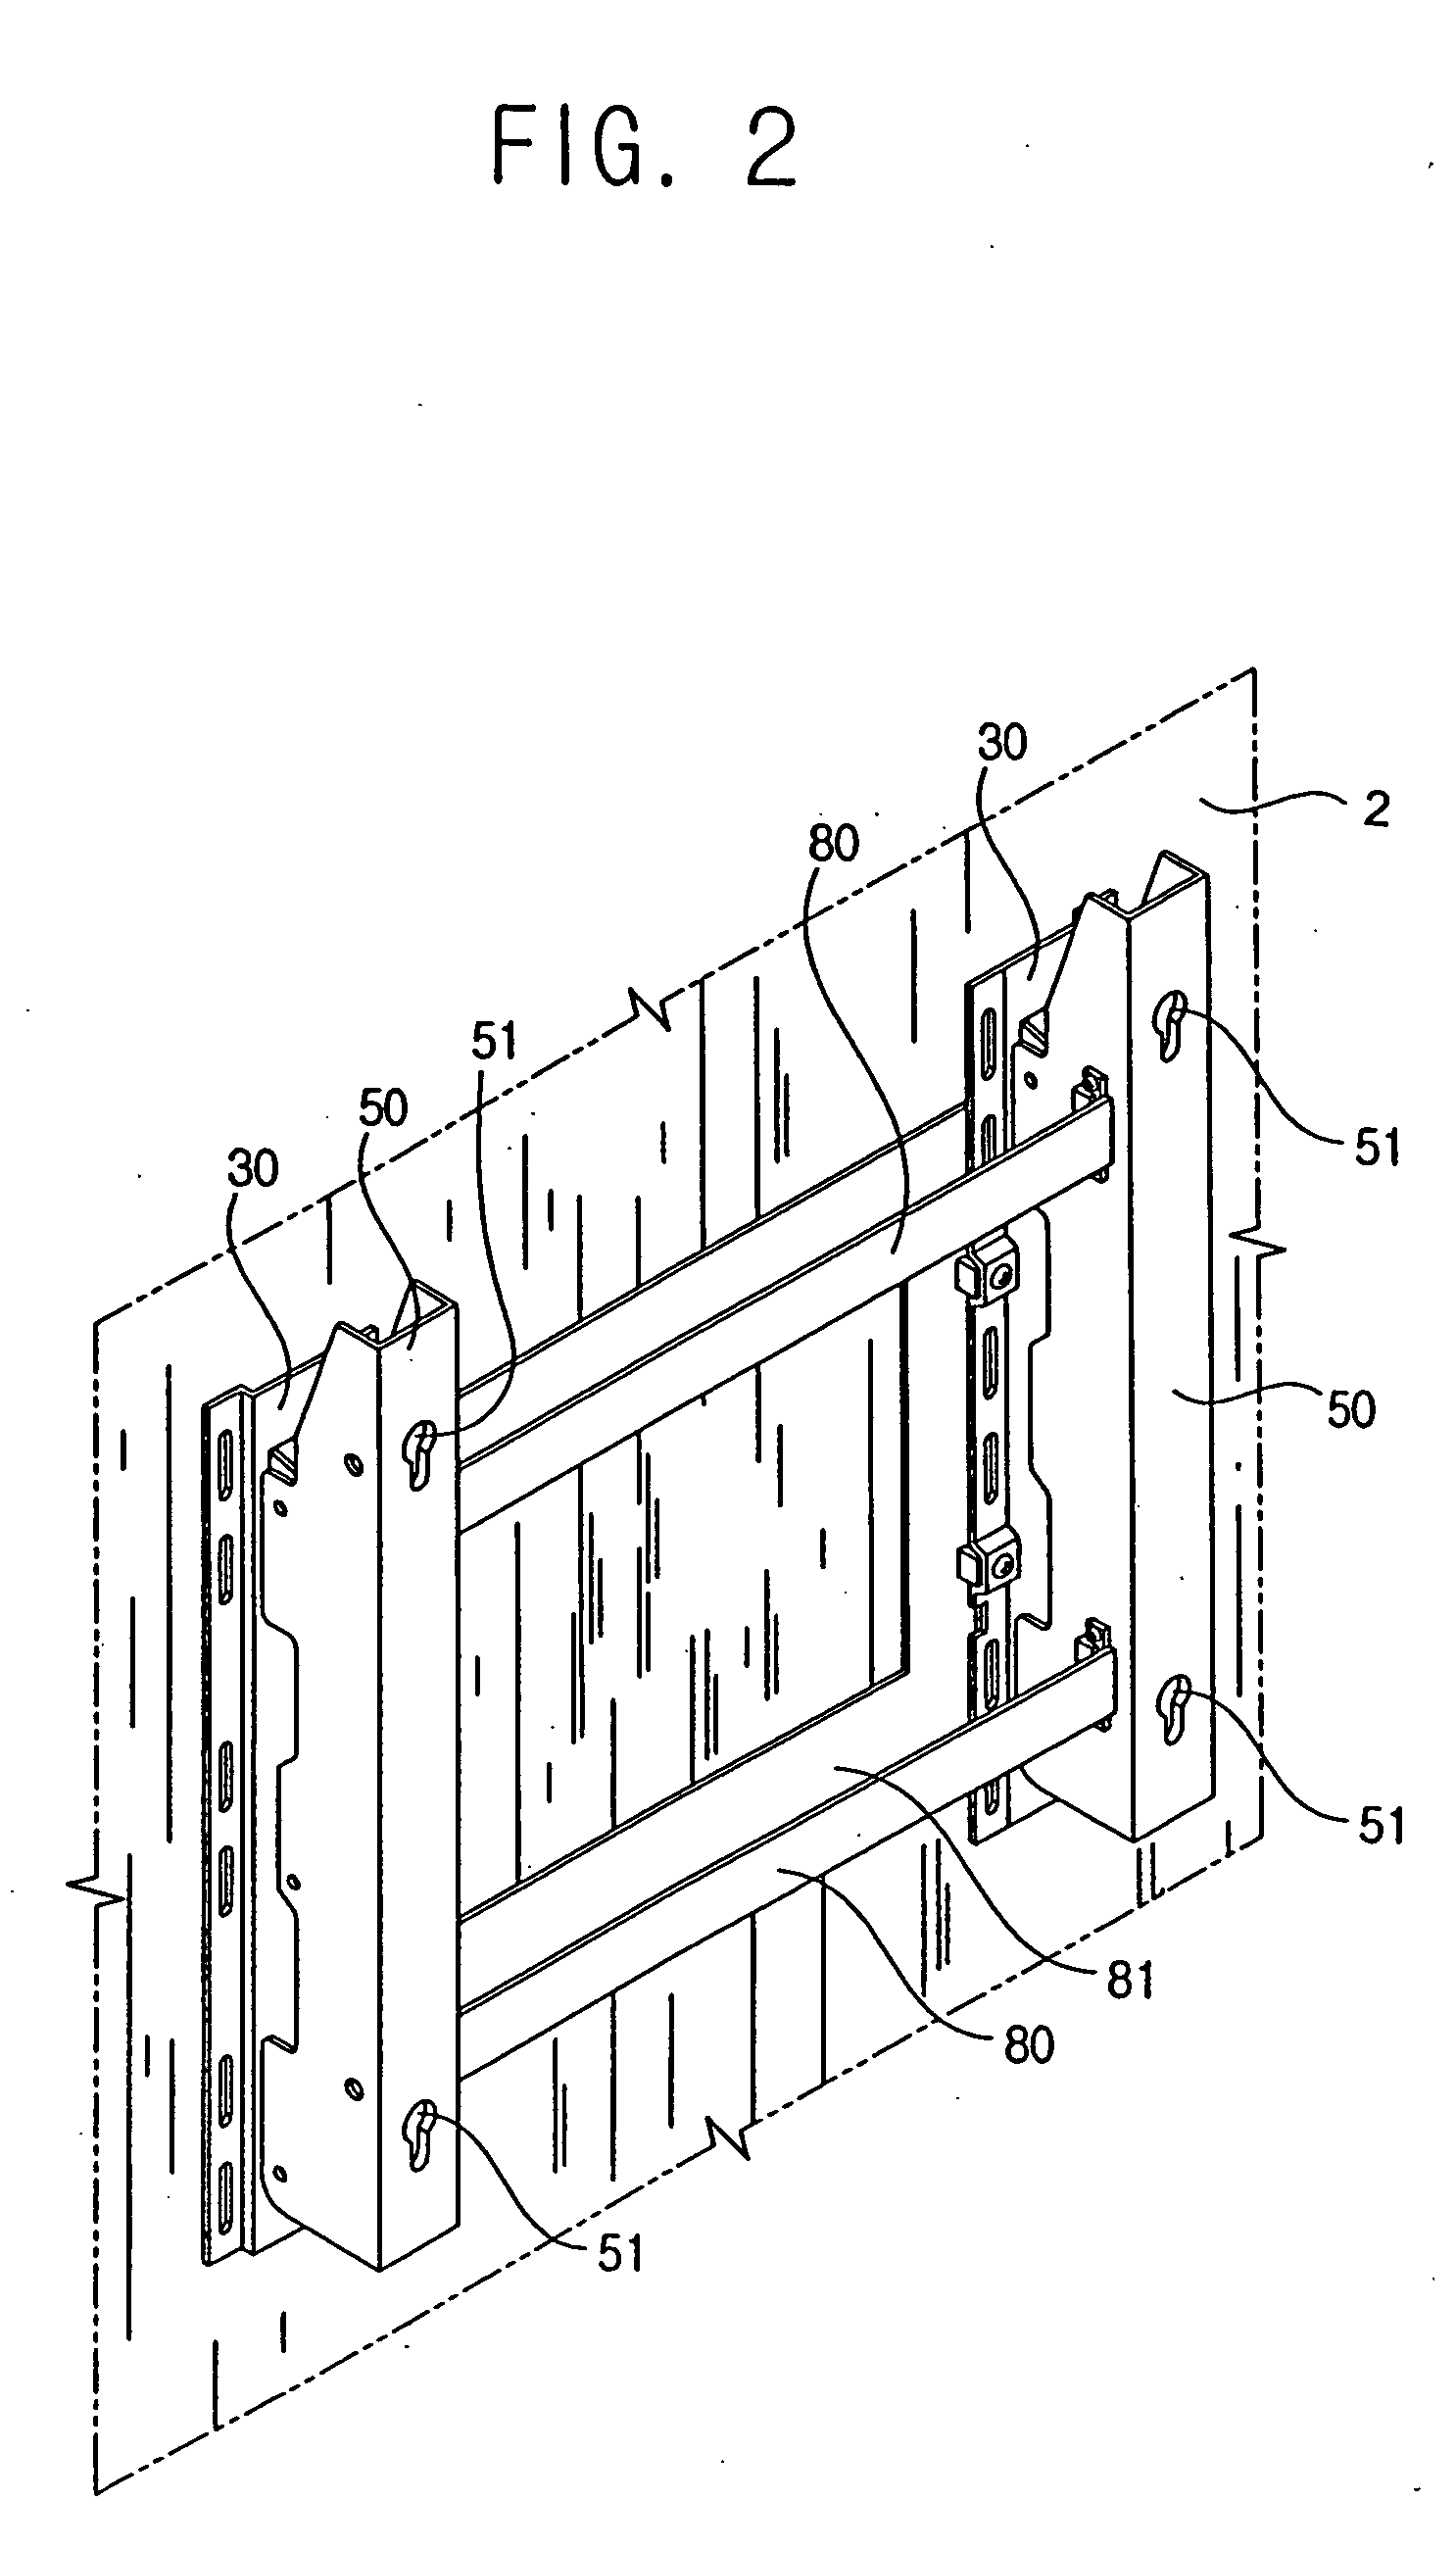 Display and display mounting apparatus